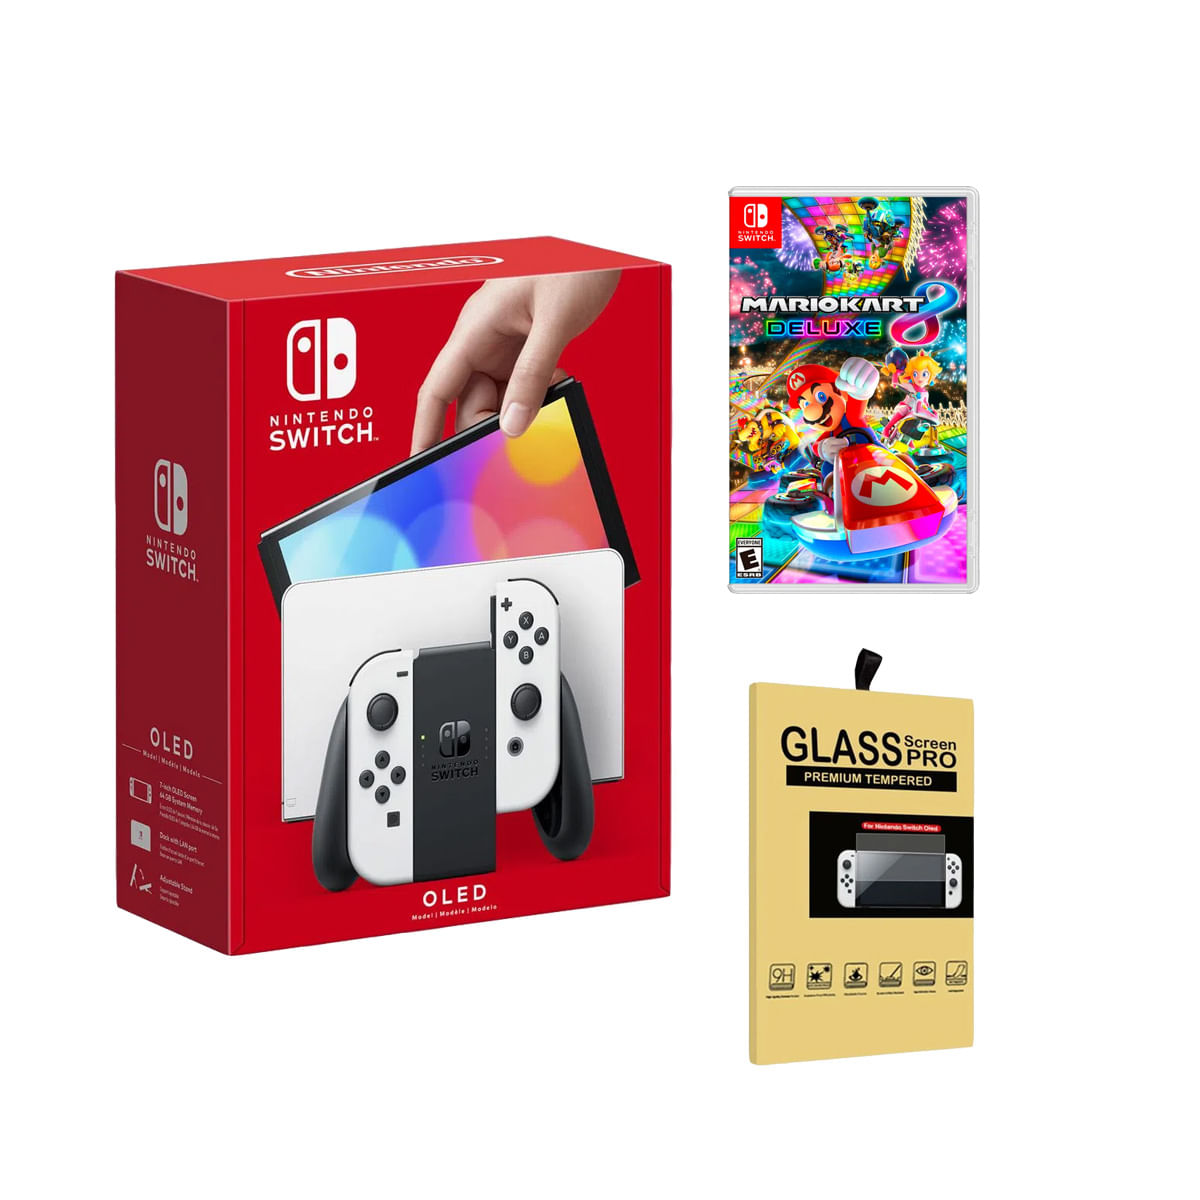 Consola Nintendo Switch Oled Blanco + Mario Kart 8 Deluxe + Mica